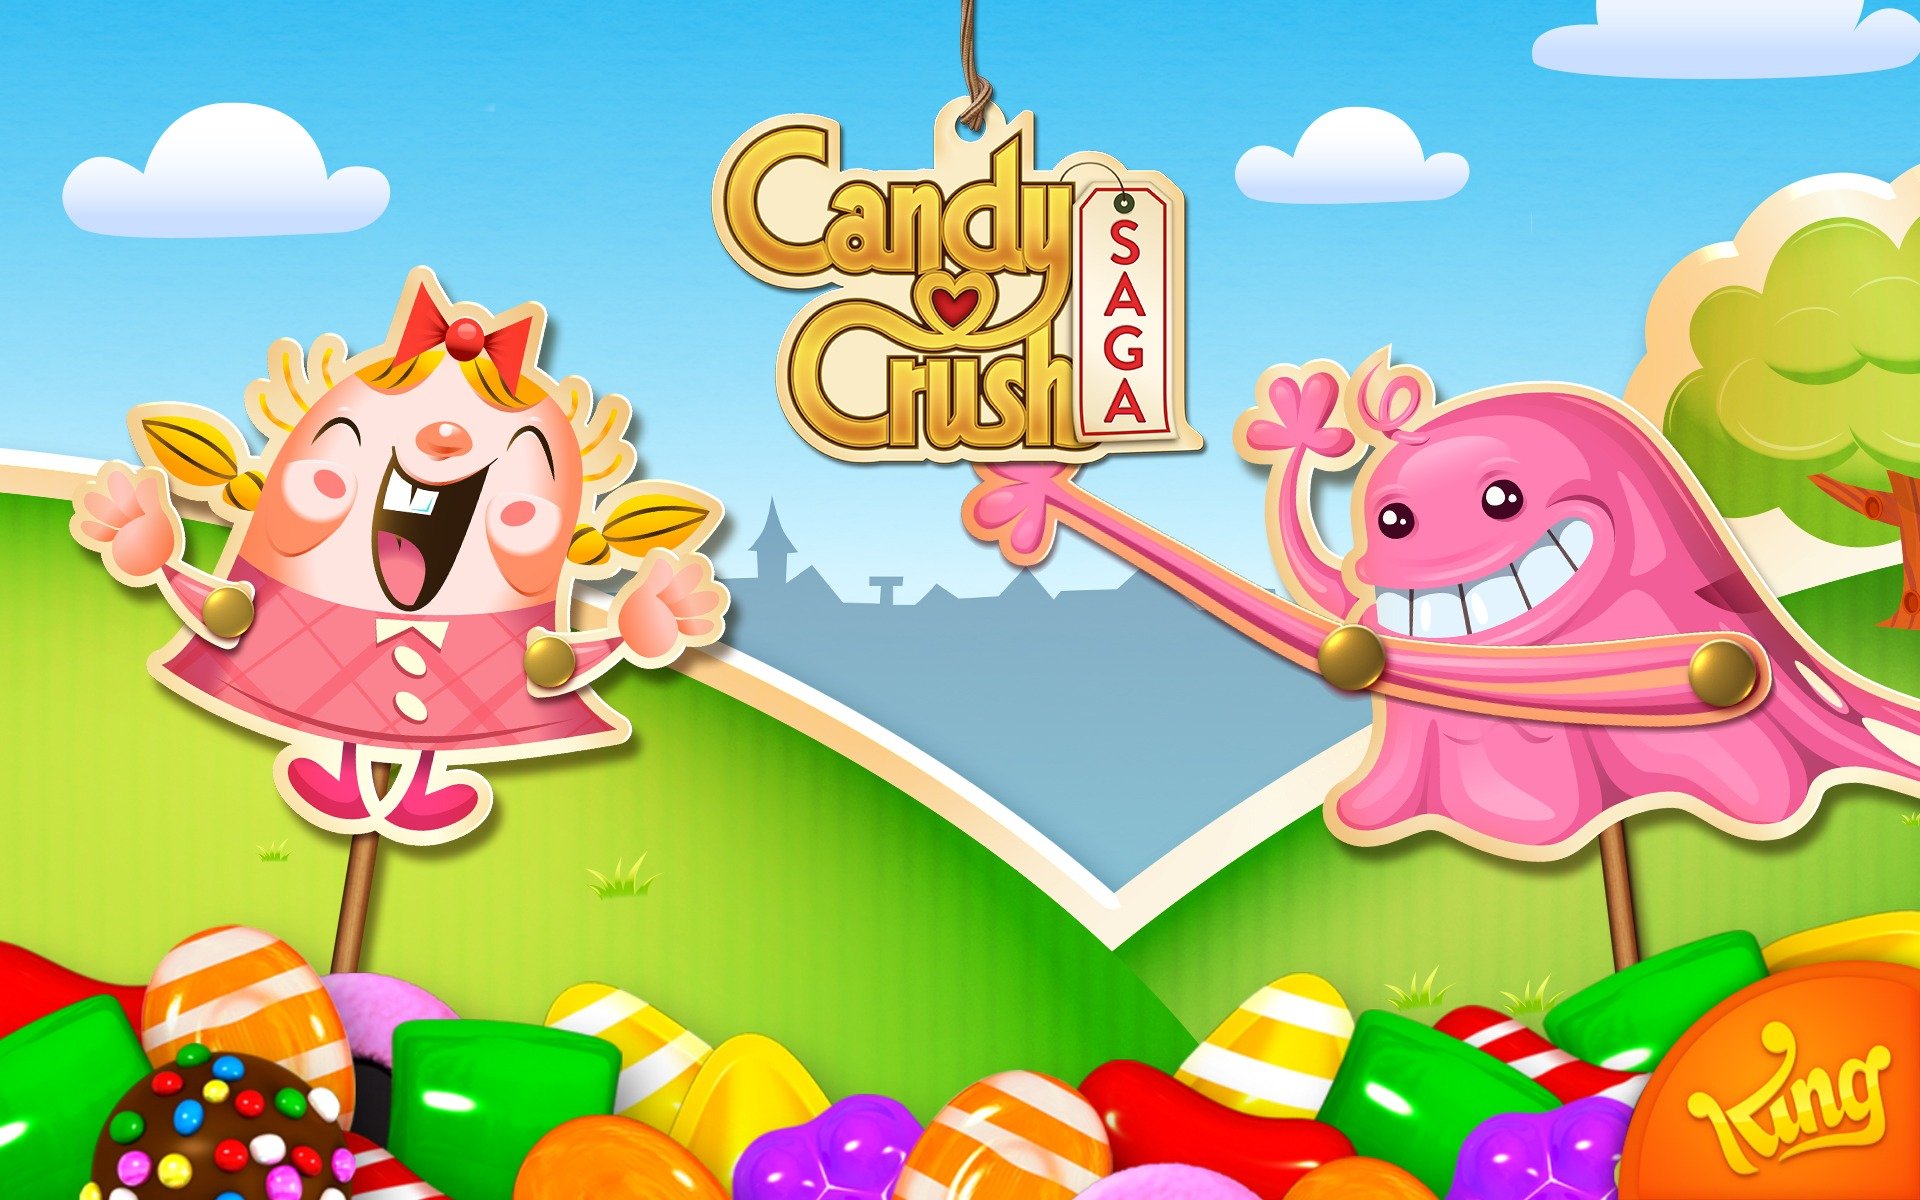 Candy-Crush-Saga-cover.jpg